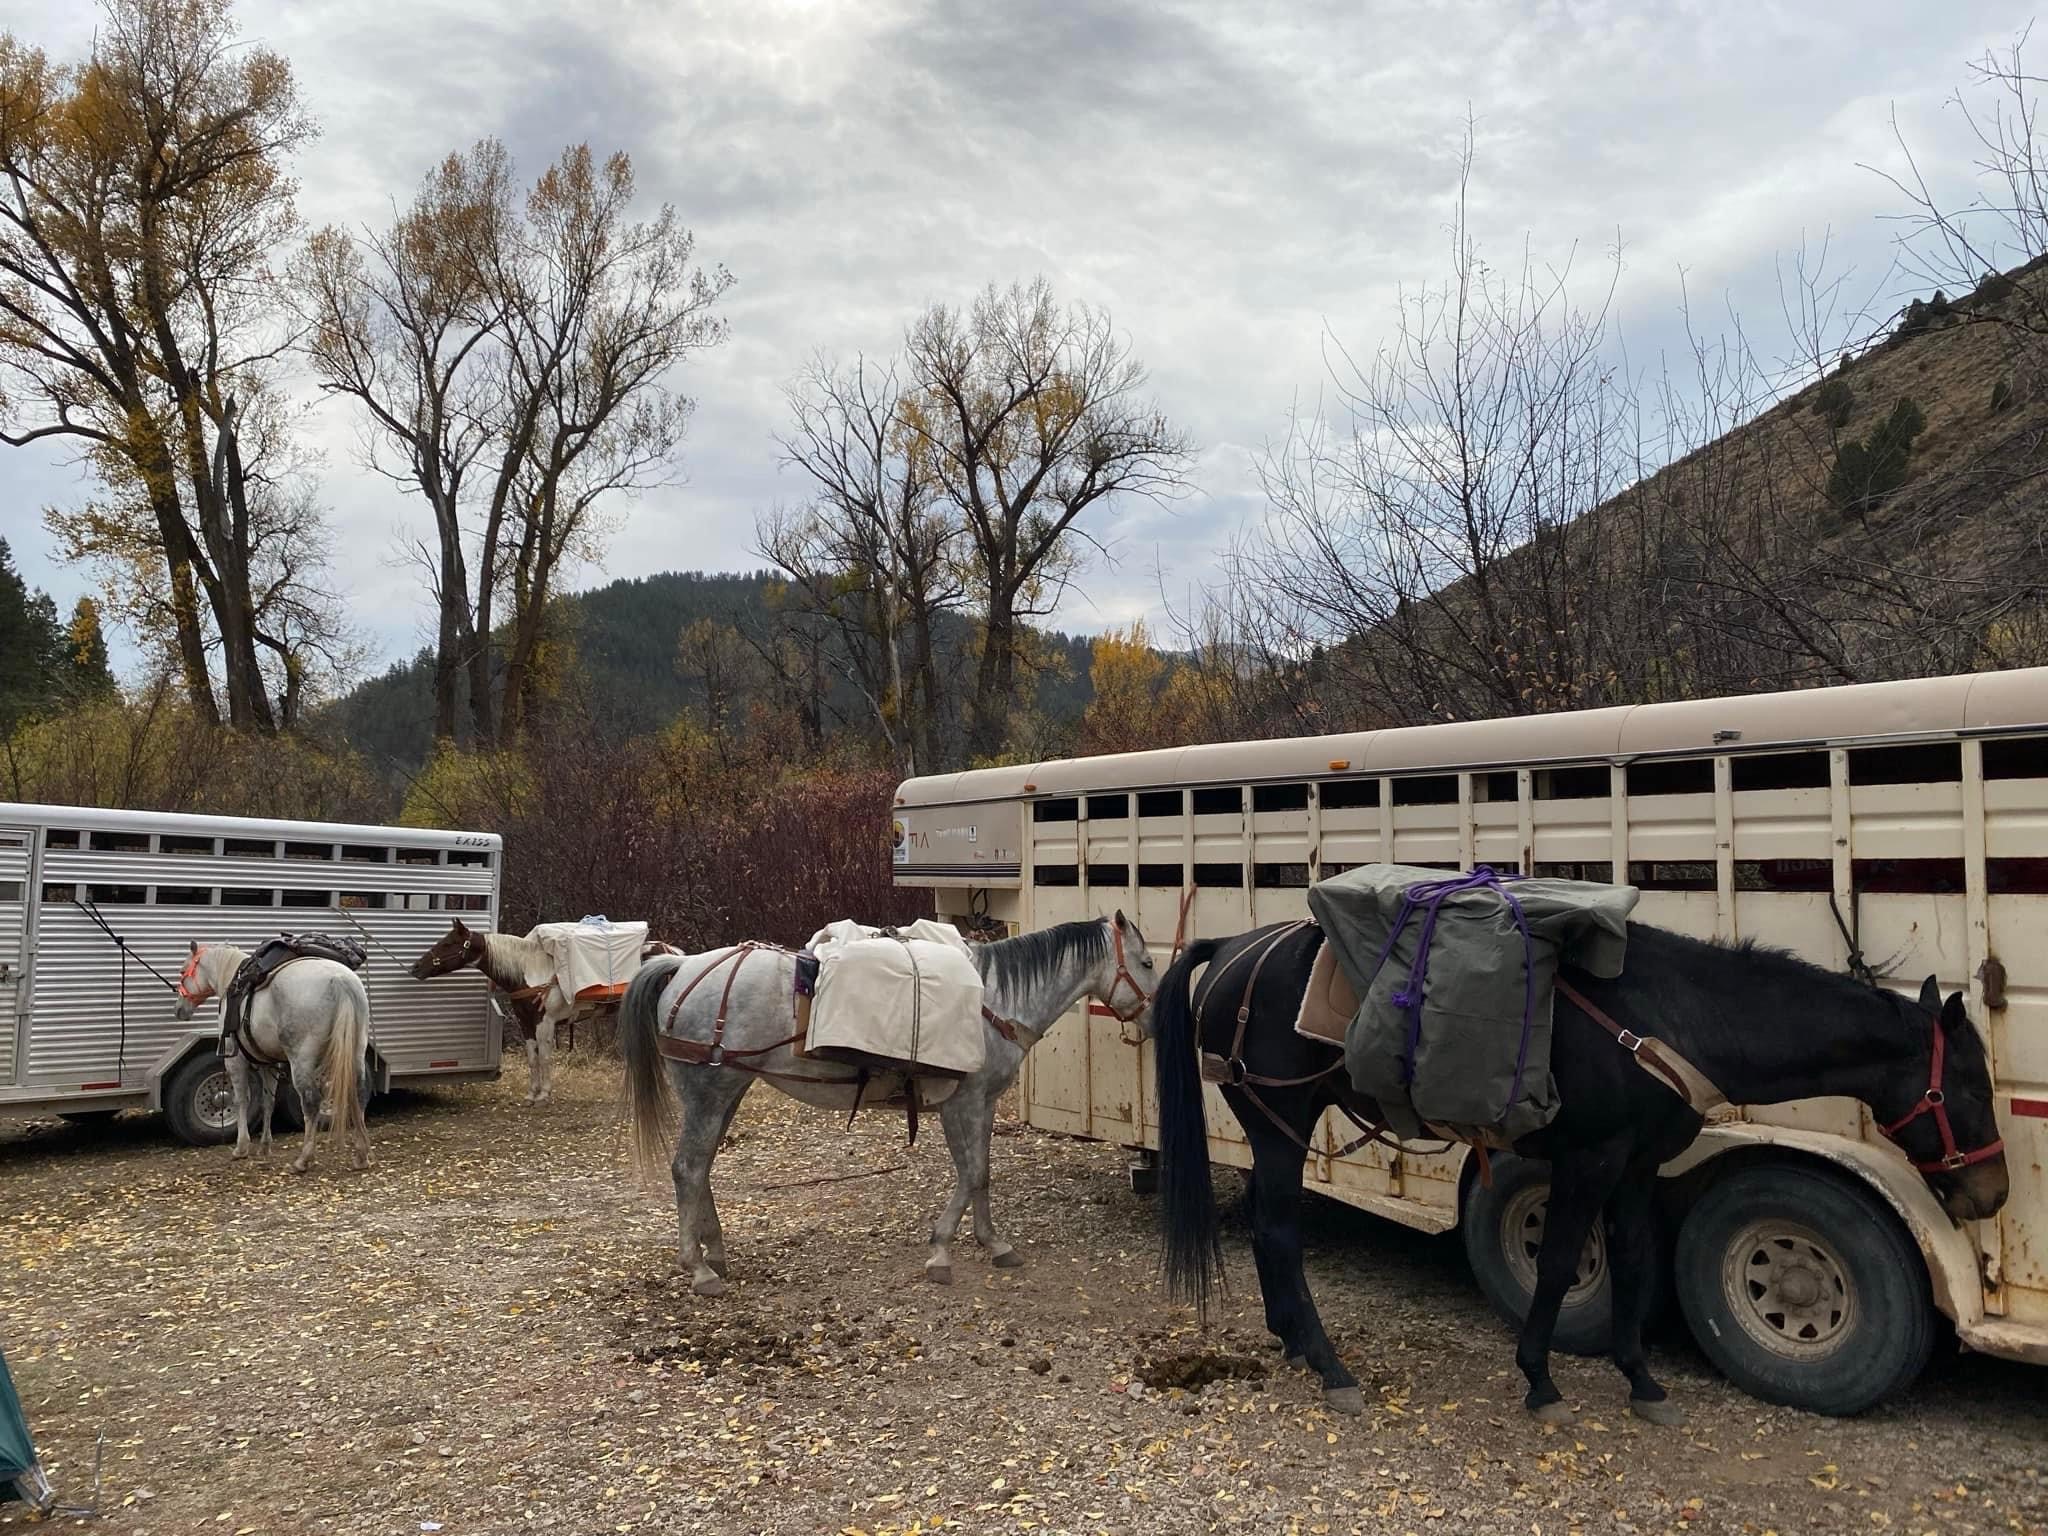 Saddlehorn Idaho Horses At Trailer